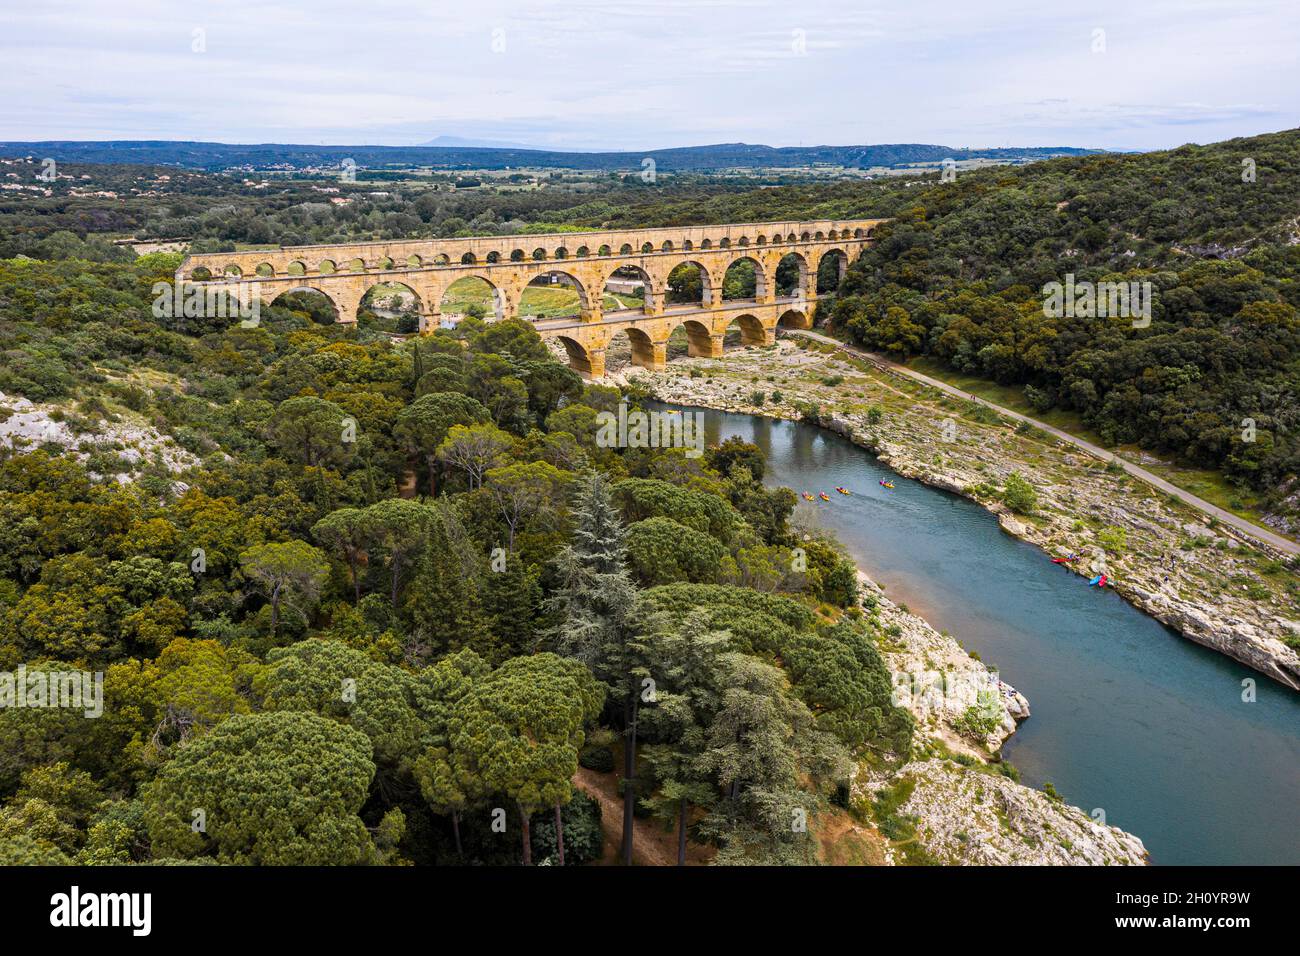 Römisches Aquädukt, Pont-du-Gard, Languedoc-Roussillon Frankreich, Luftbild Stockfoto